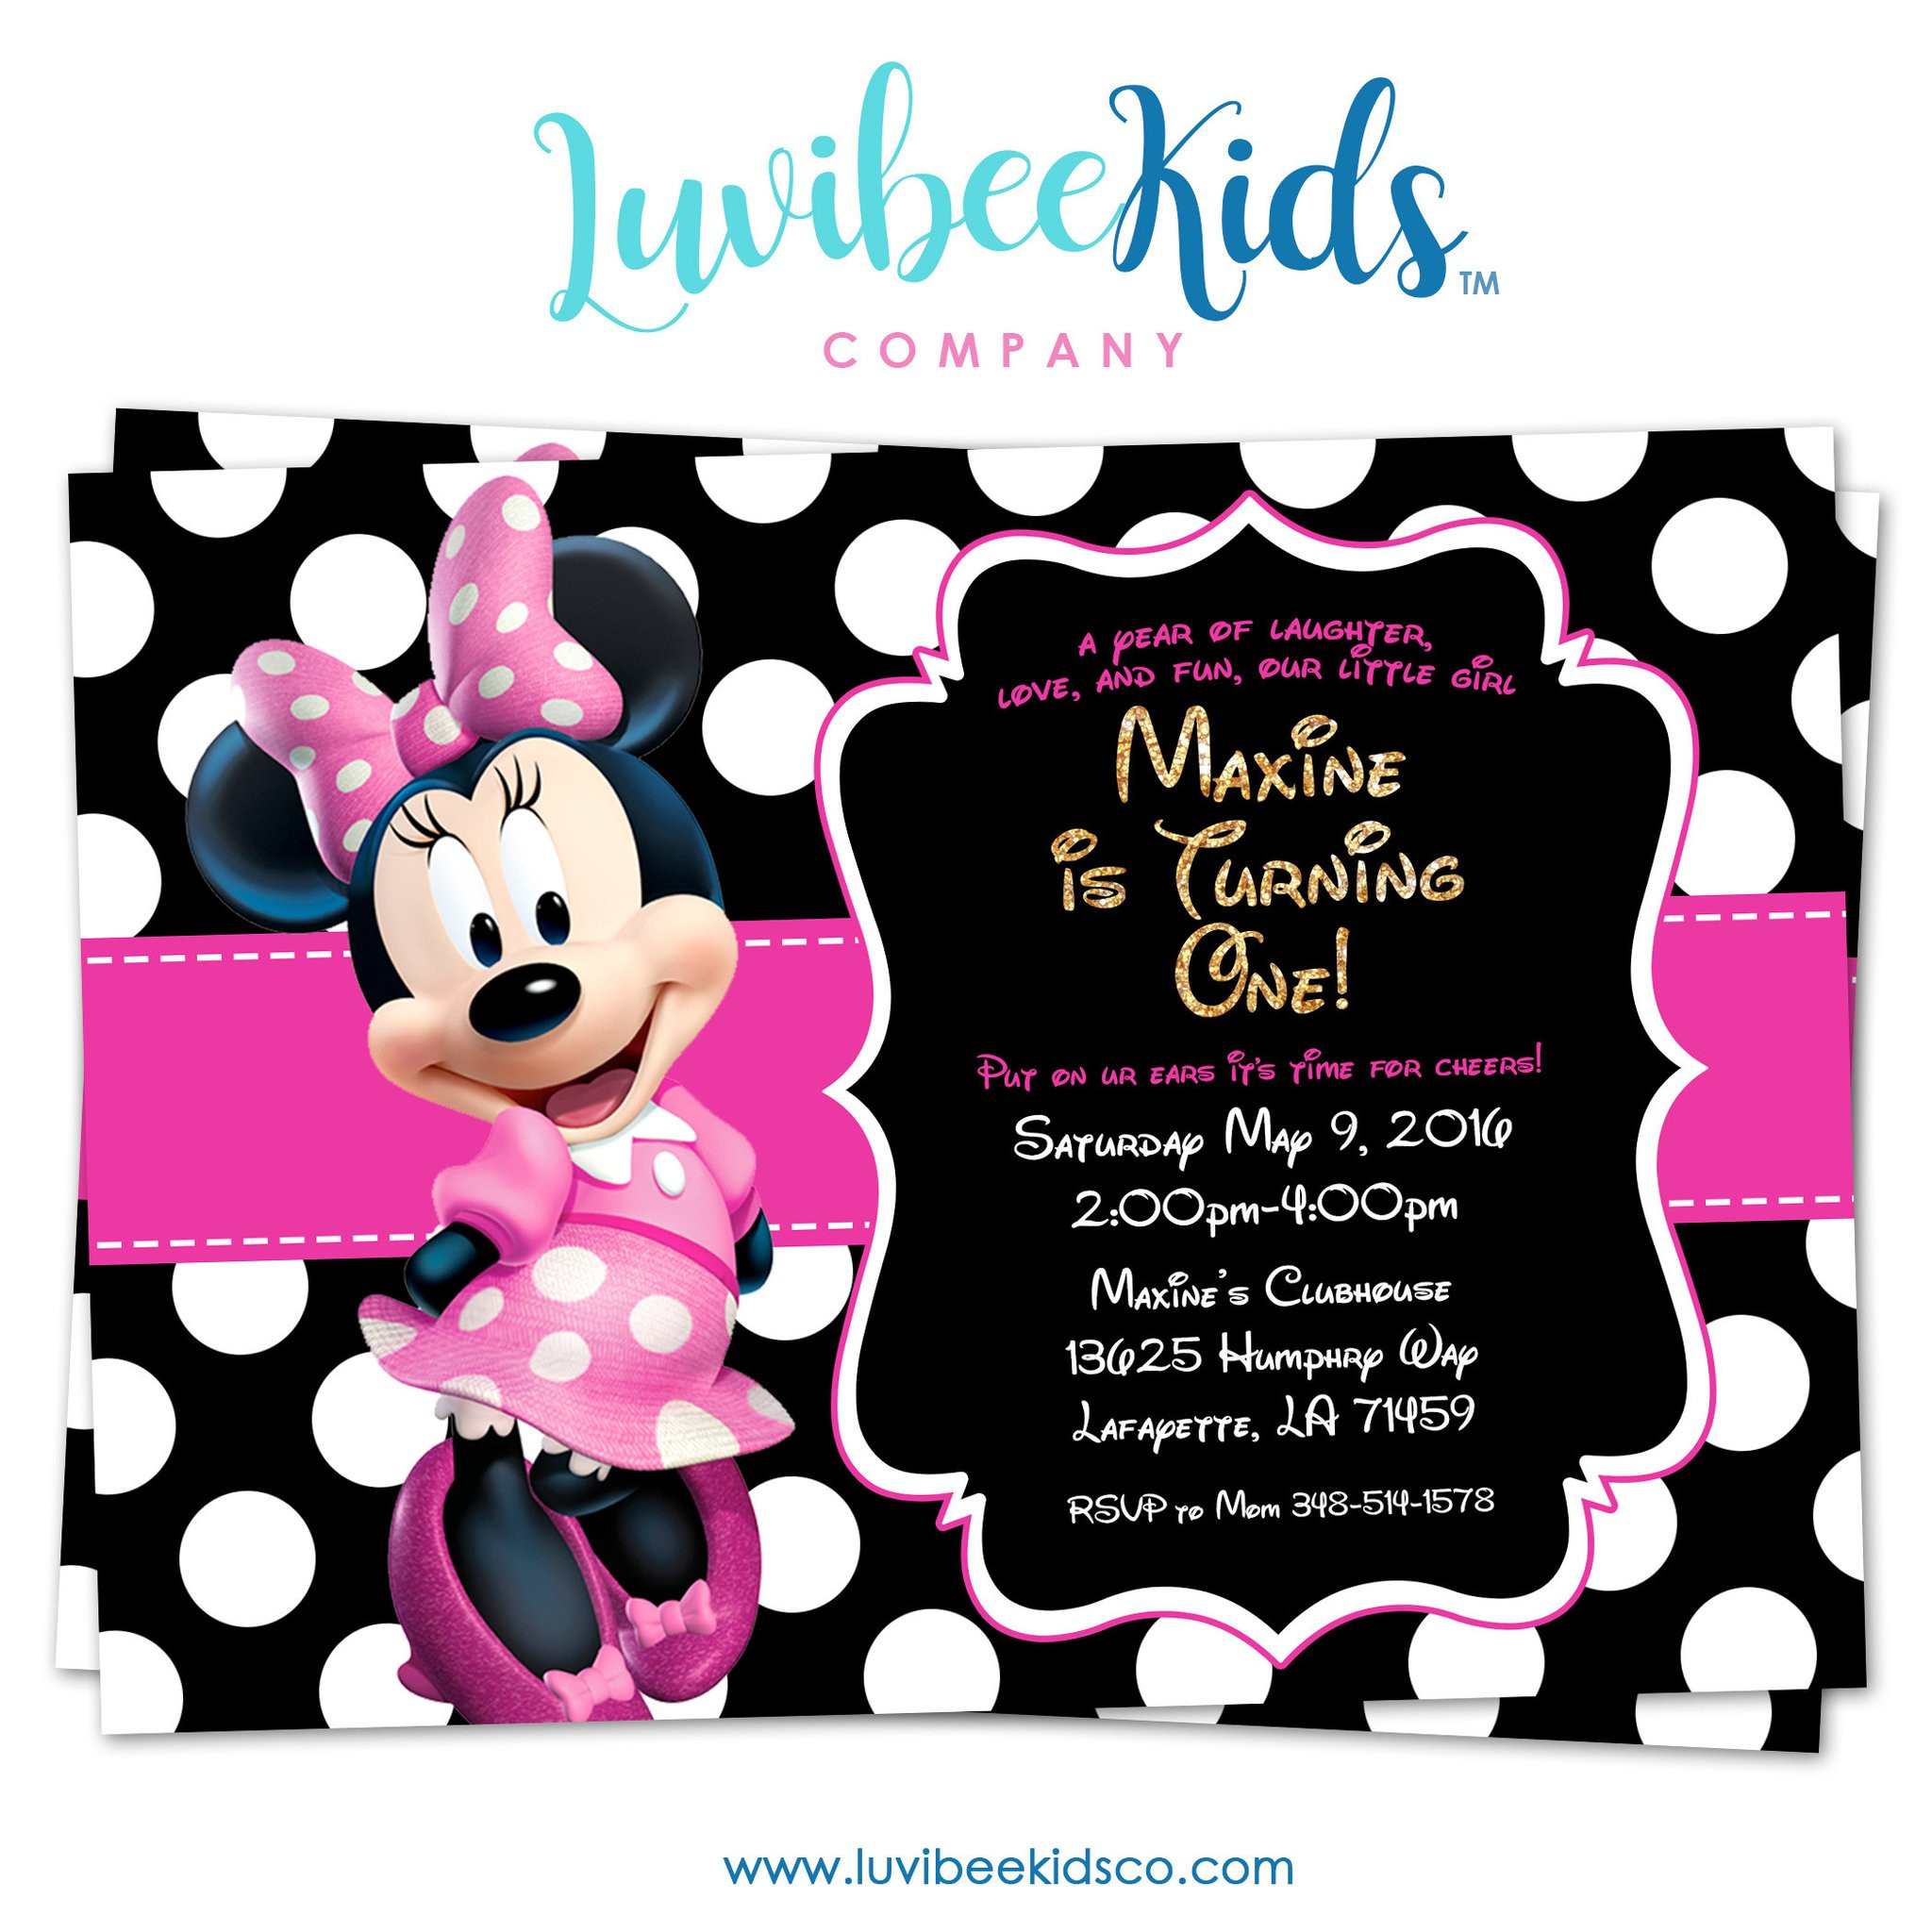 Printable Minnie Mouse Birthday Invitations
 Minnie Mouse Birthday Invitation Printable Invite